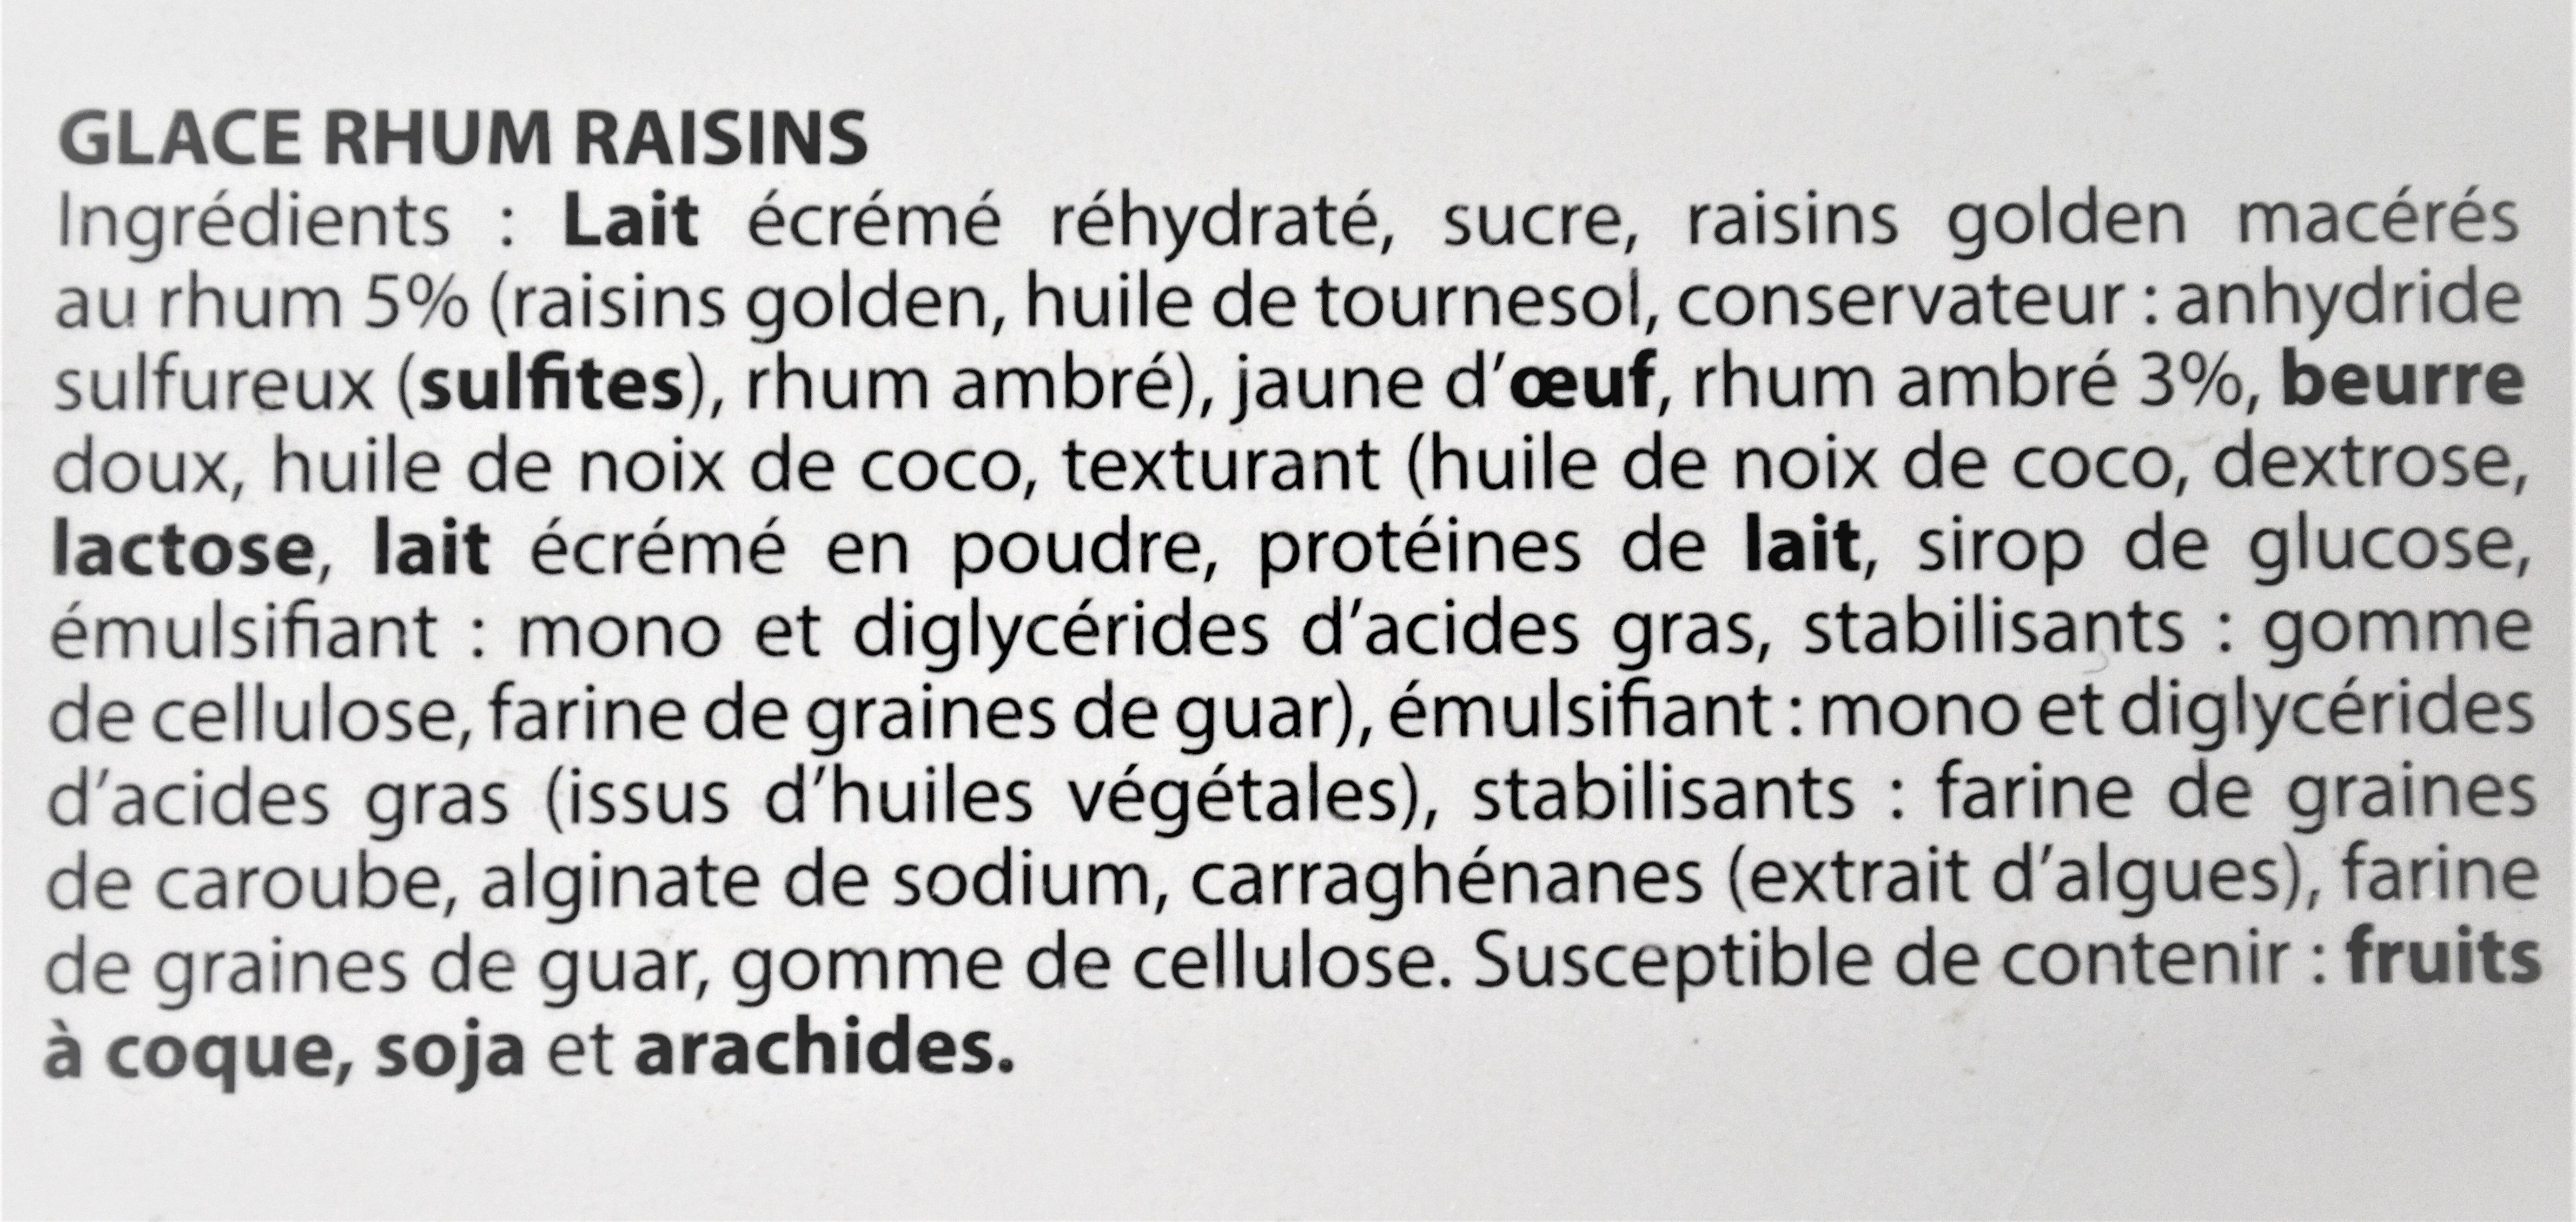 Glace RHUM RAISINS, raisins gloden macérés - Ingredientes - fr